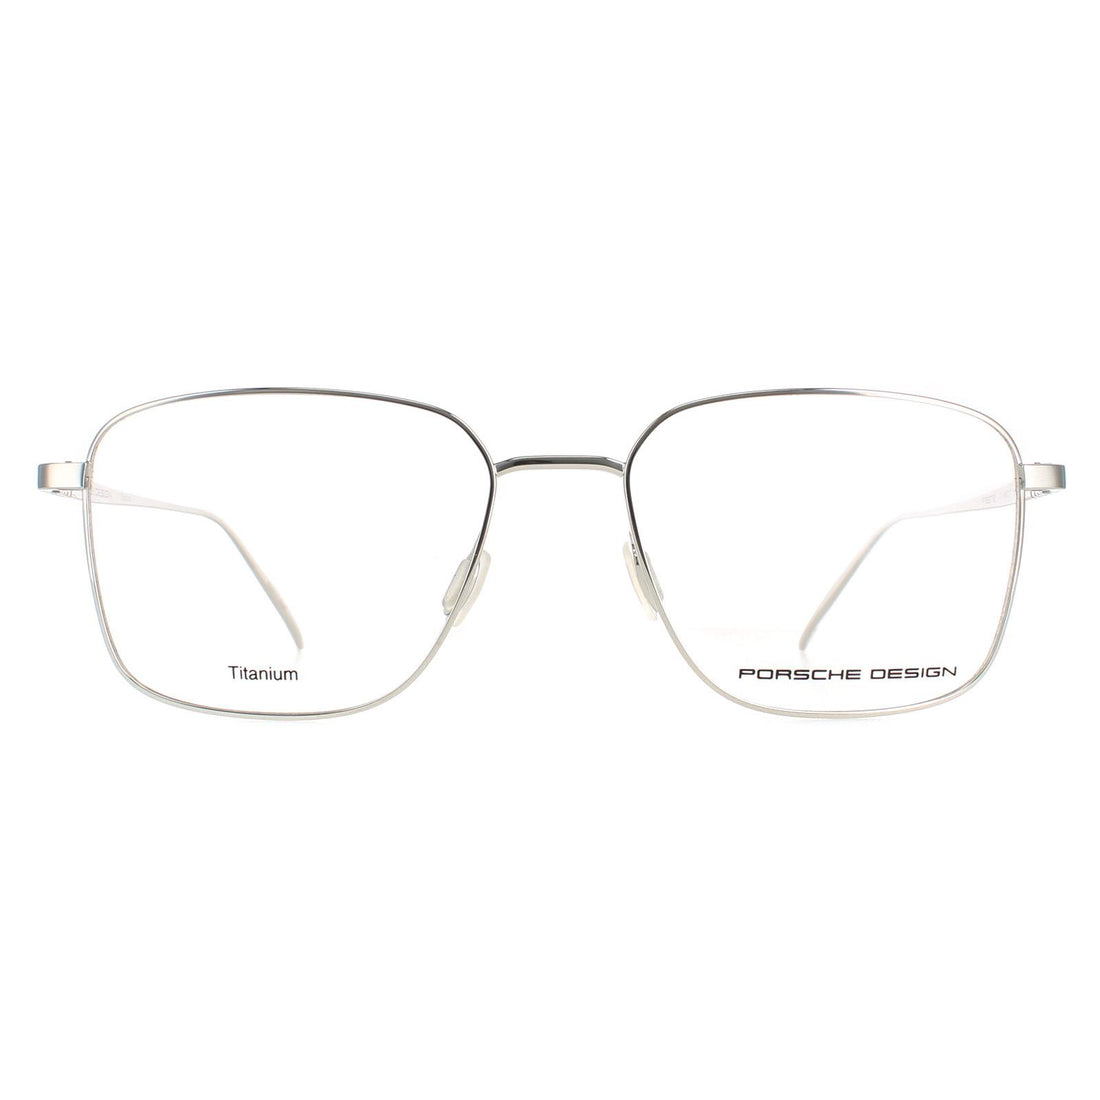 Porsche Design Glasses Frames P8372 C Palladium Men